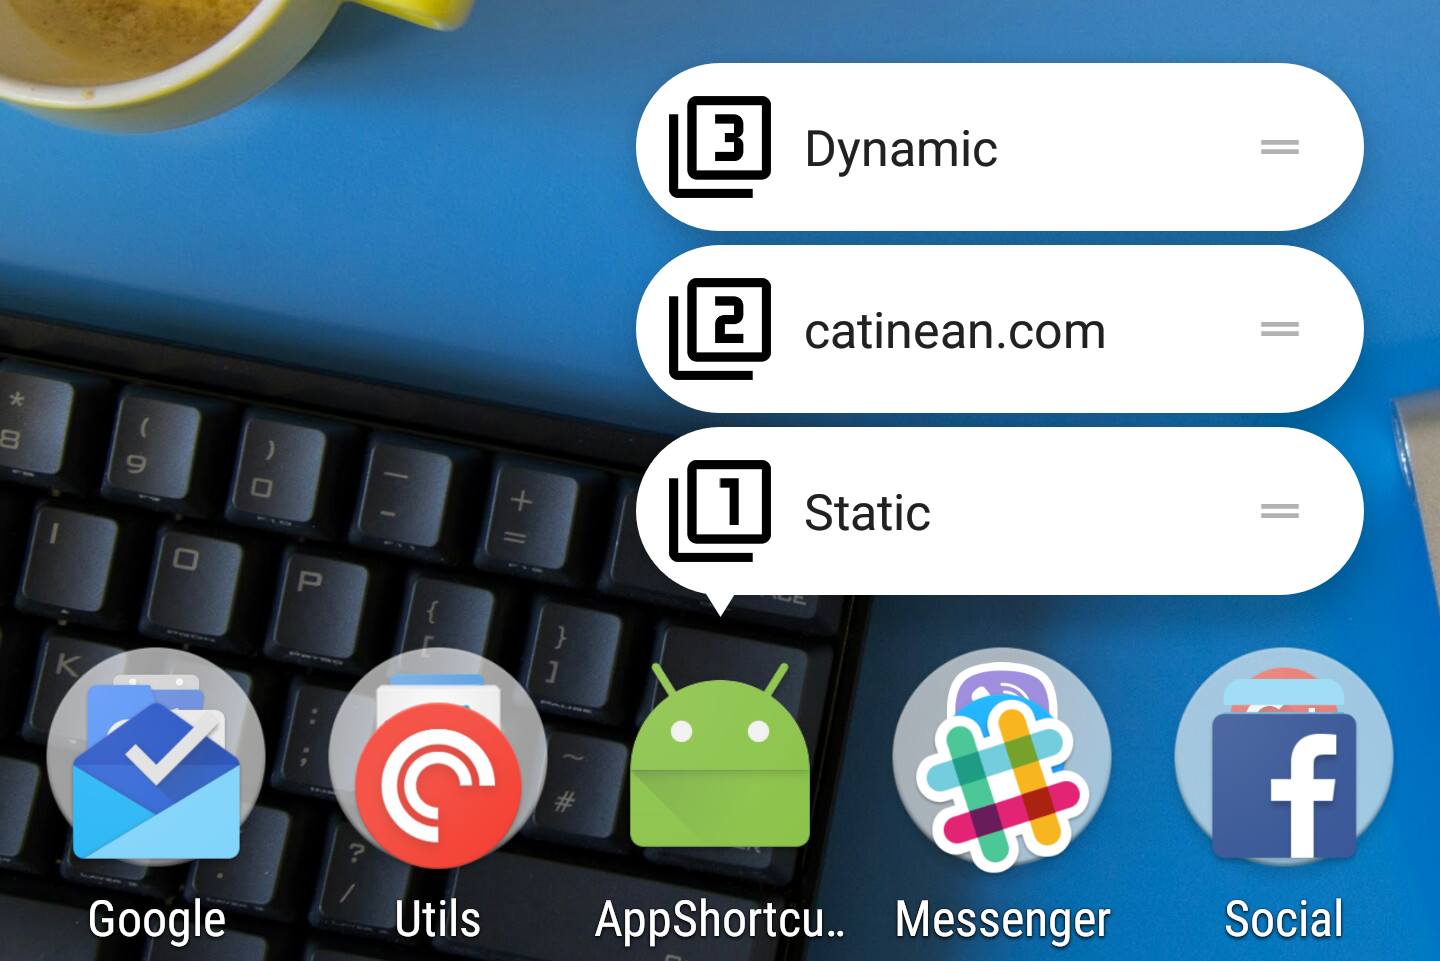 shortcuts app icon beige